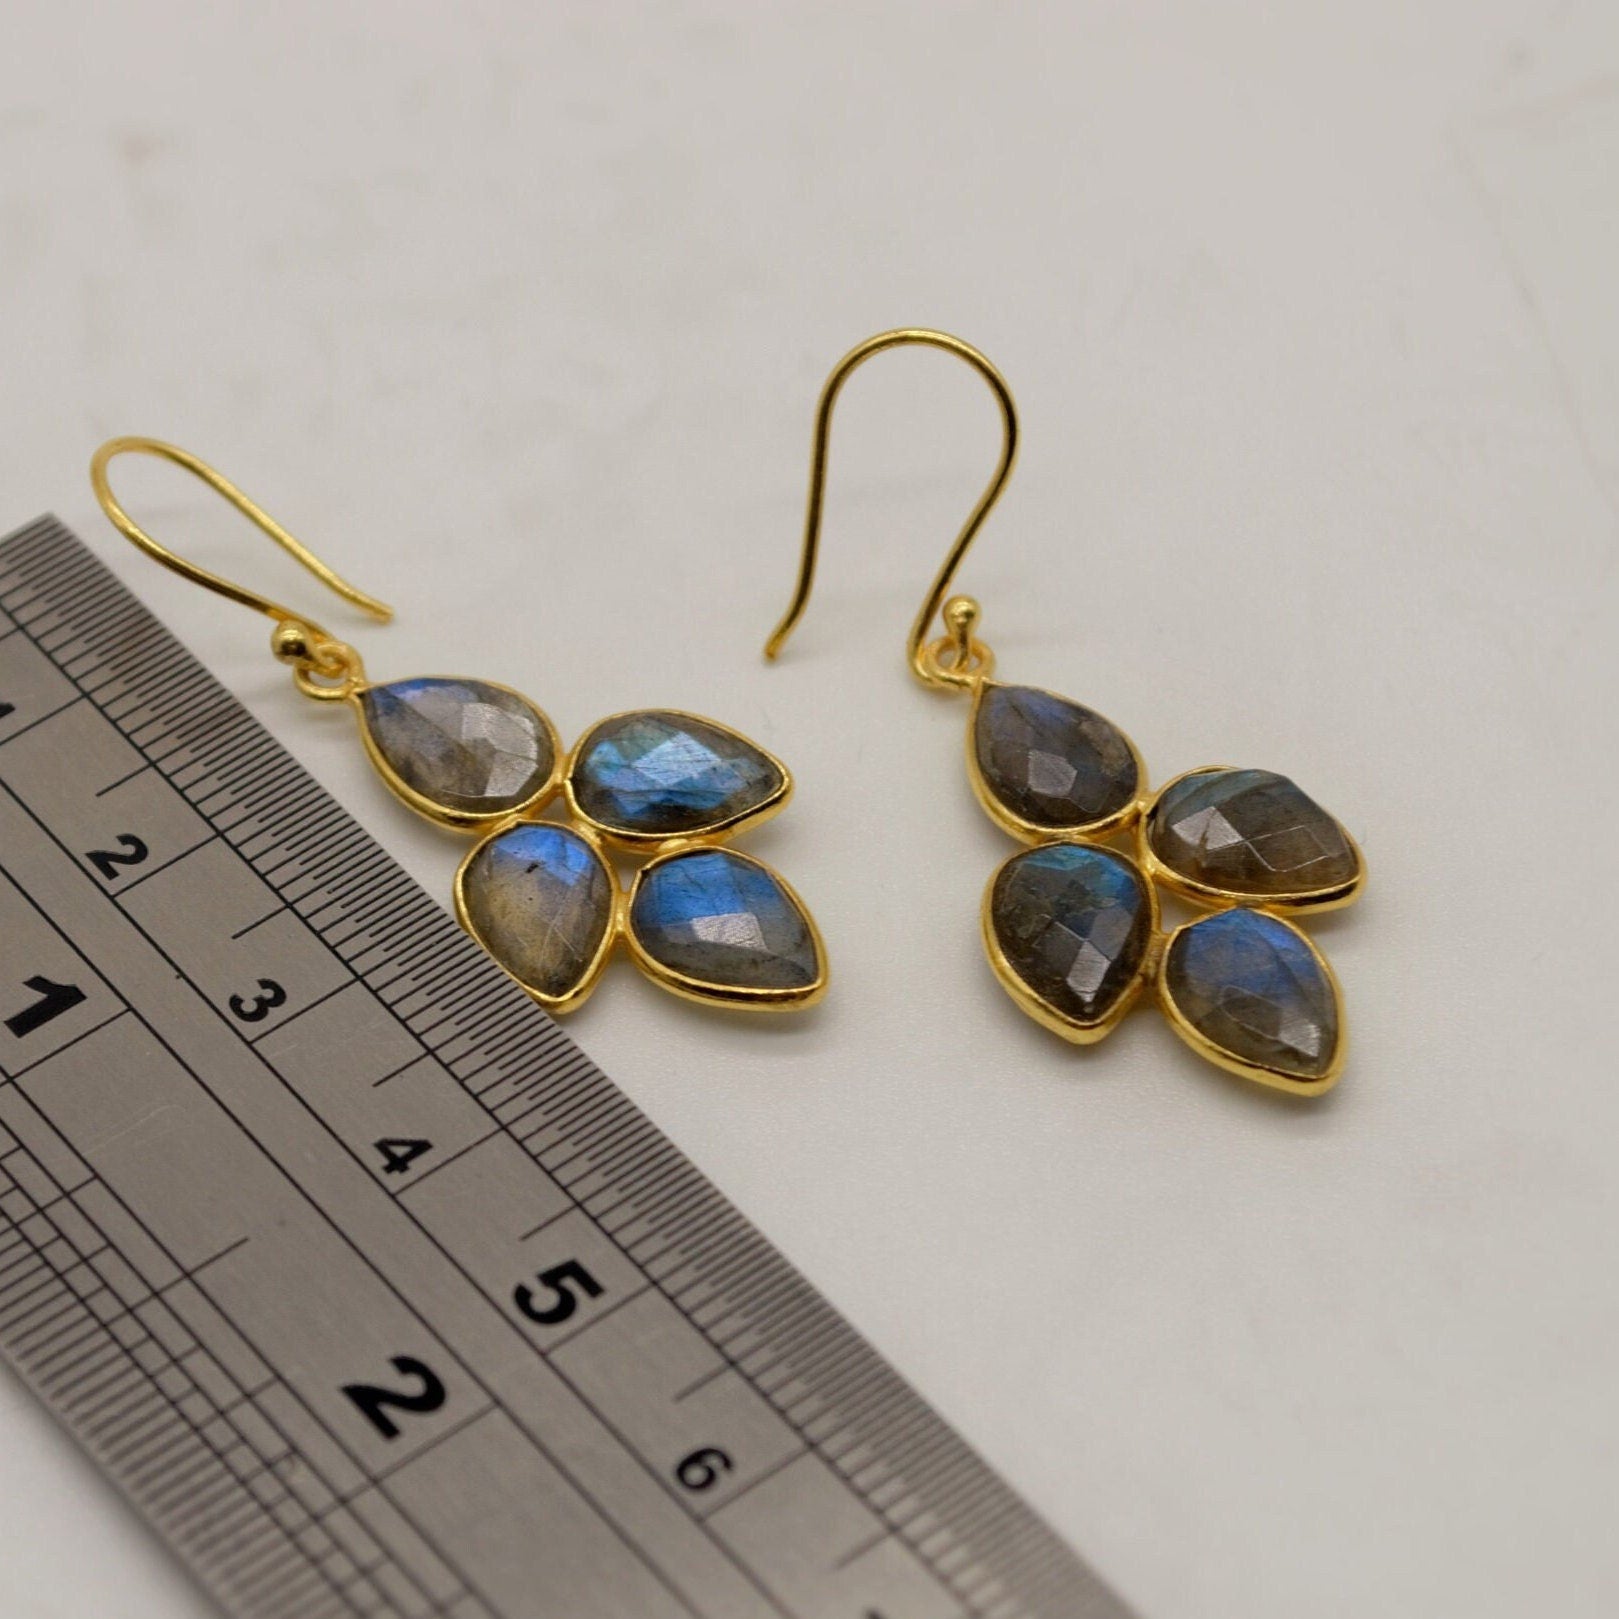 Handmade Labradorite Earrings - Sterling Silver & Gold, Sparkling Gemstone Dangles, Stylish Gift Idea